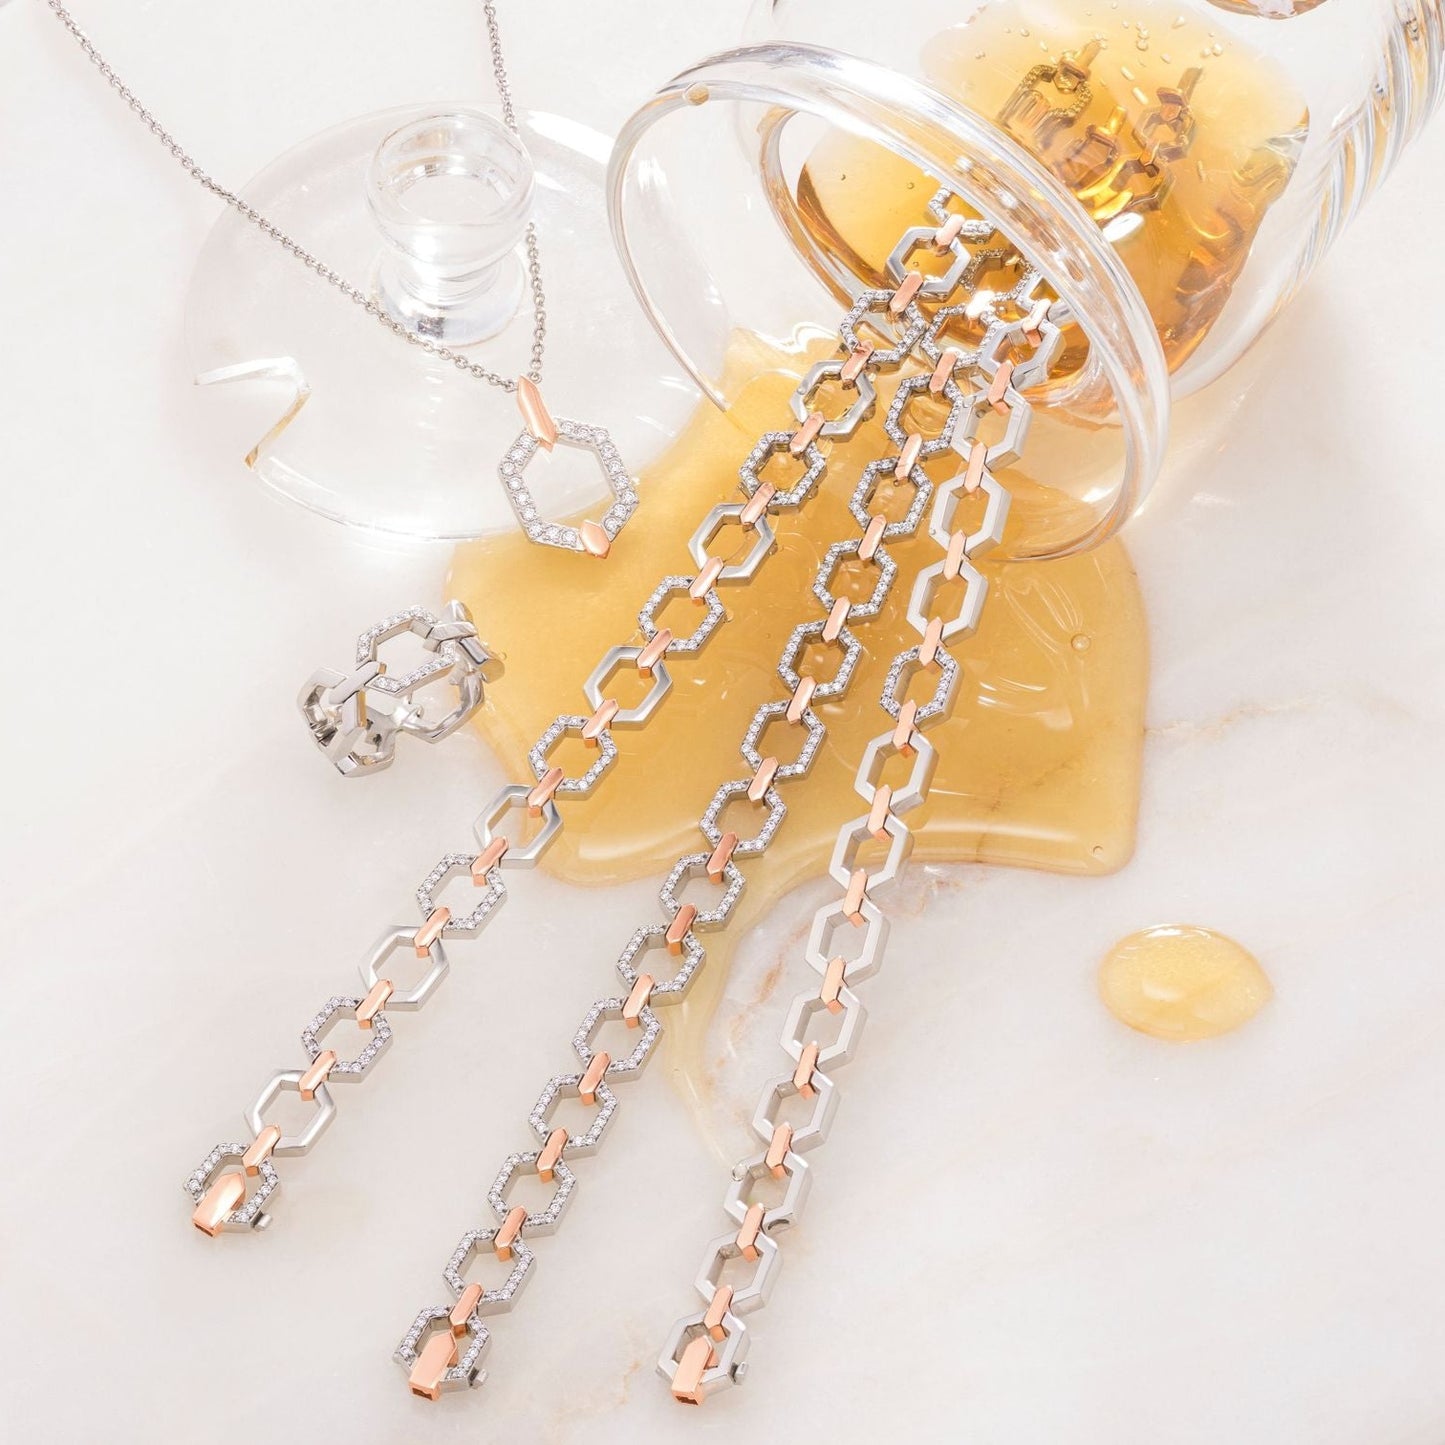 Nectar Platinum and Rose Gold Bracelet With Diamond Set Link